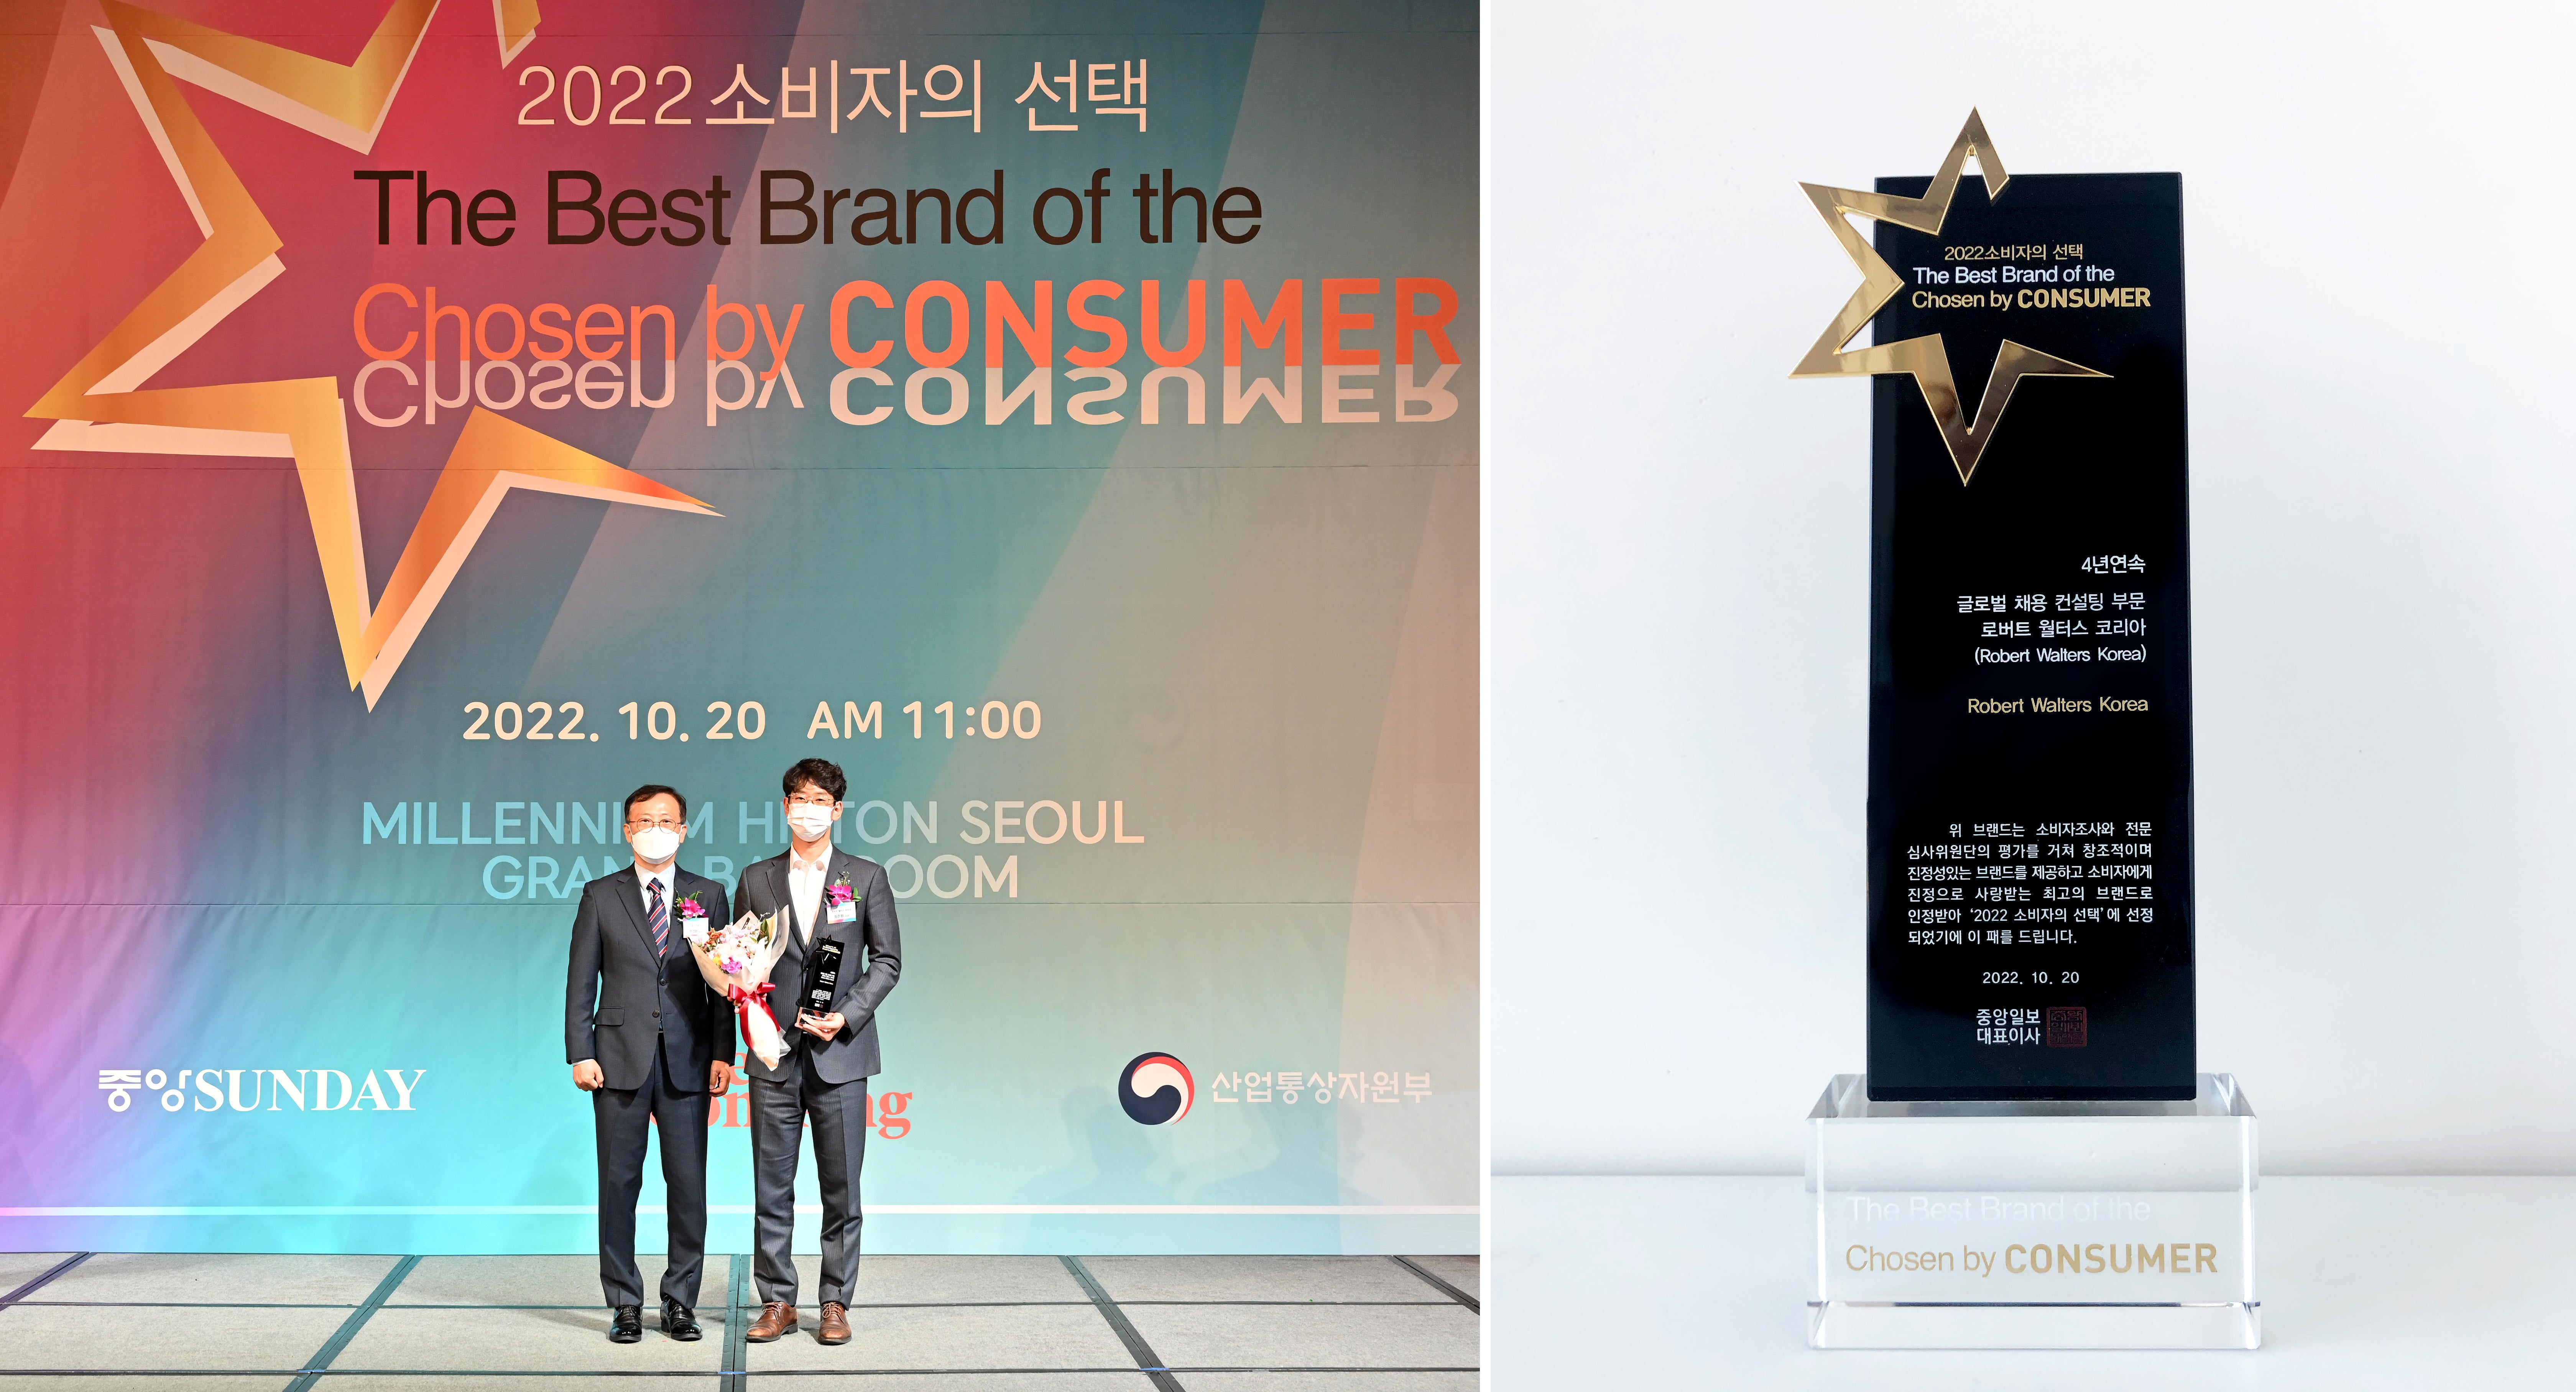 Robert Walters Korea Won the Consumer Choice Award 2021